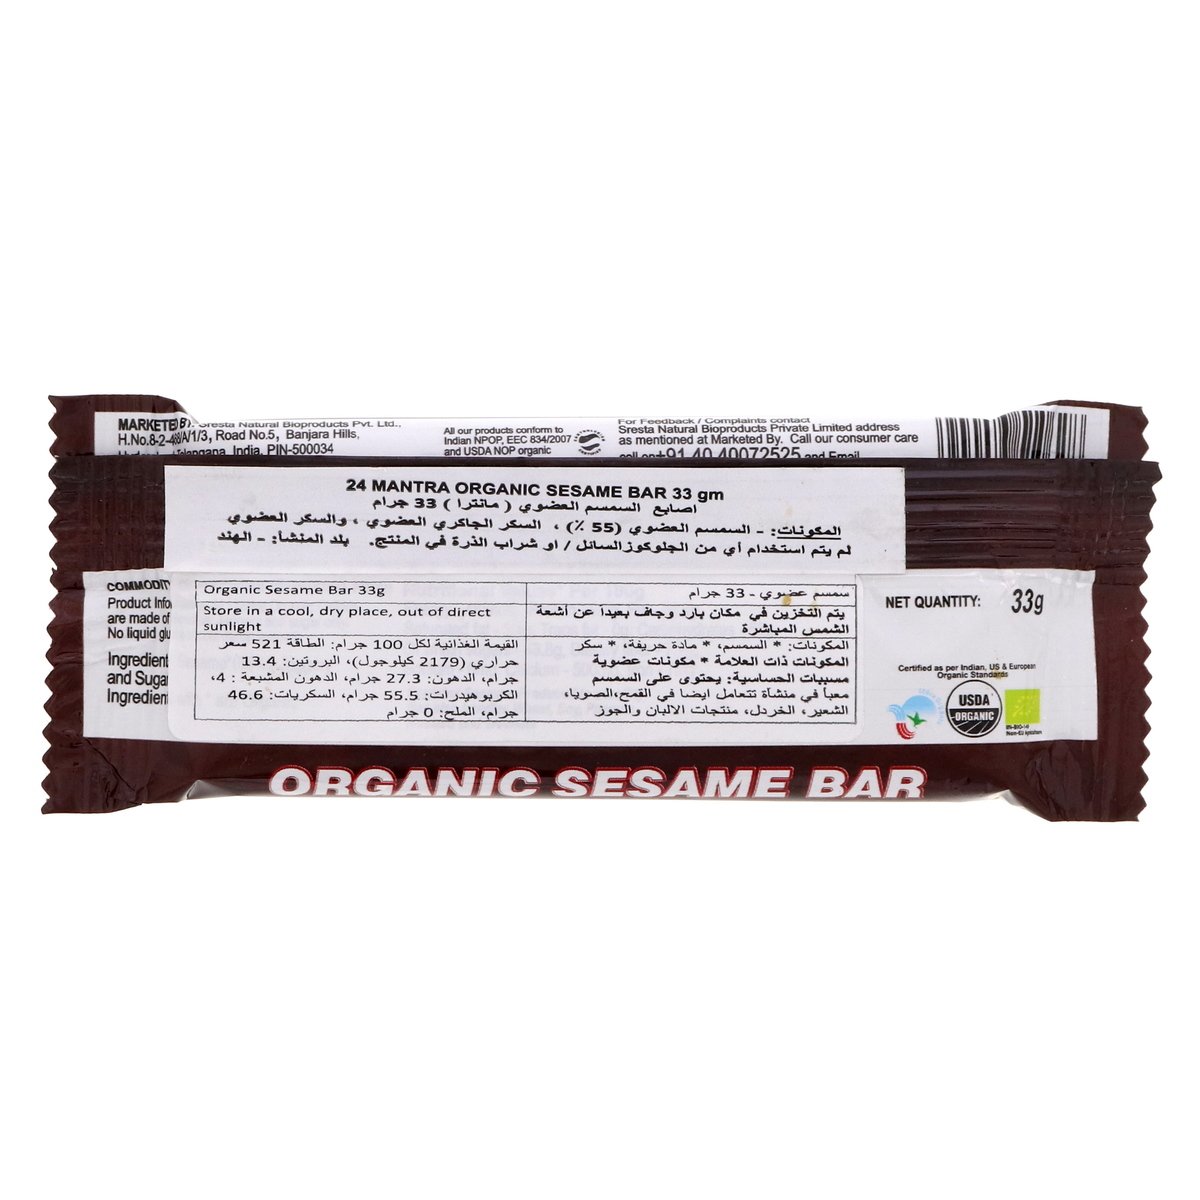 24 Mantra Organic Sesame Bar 33 g